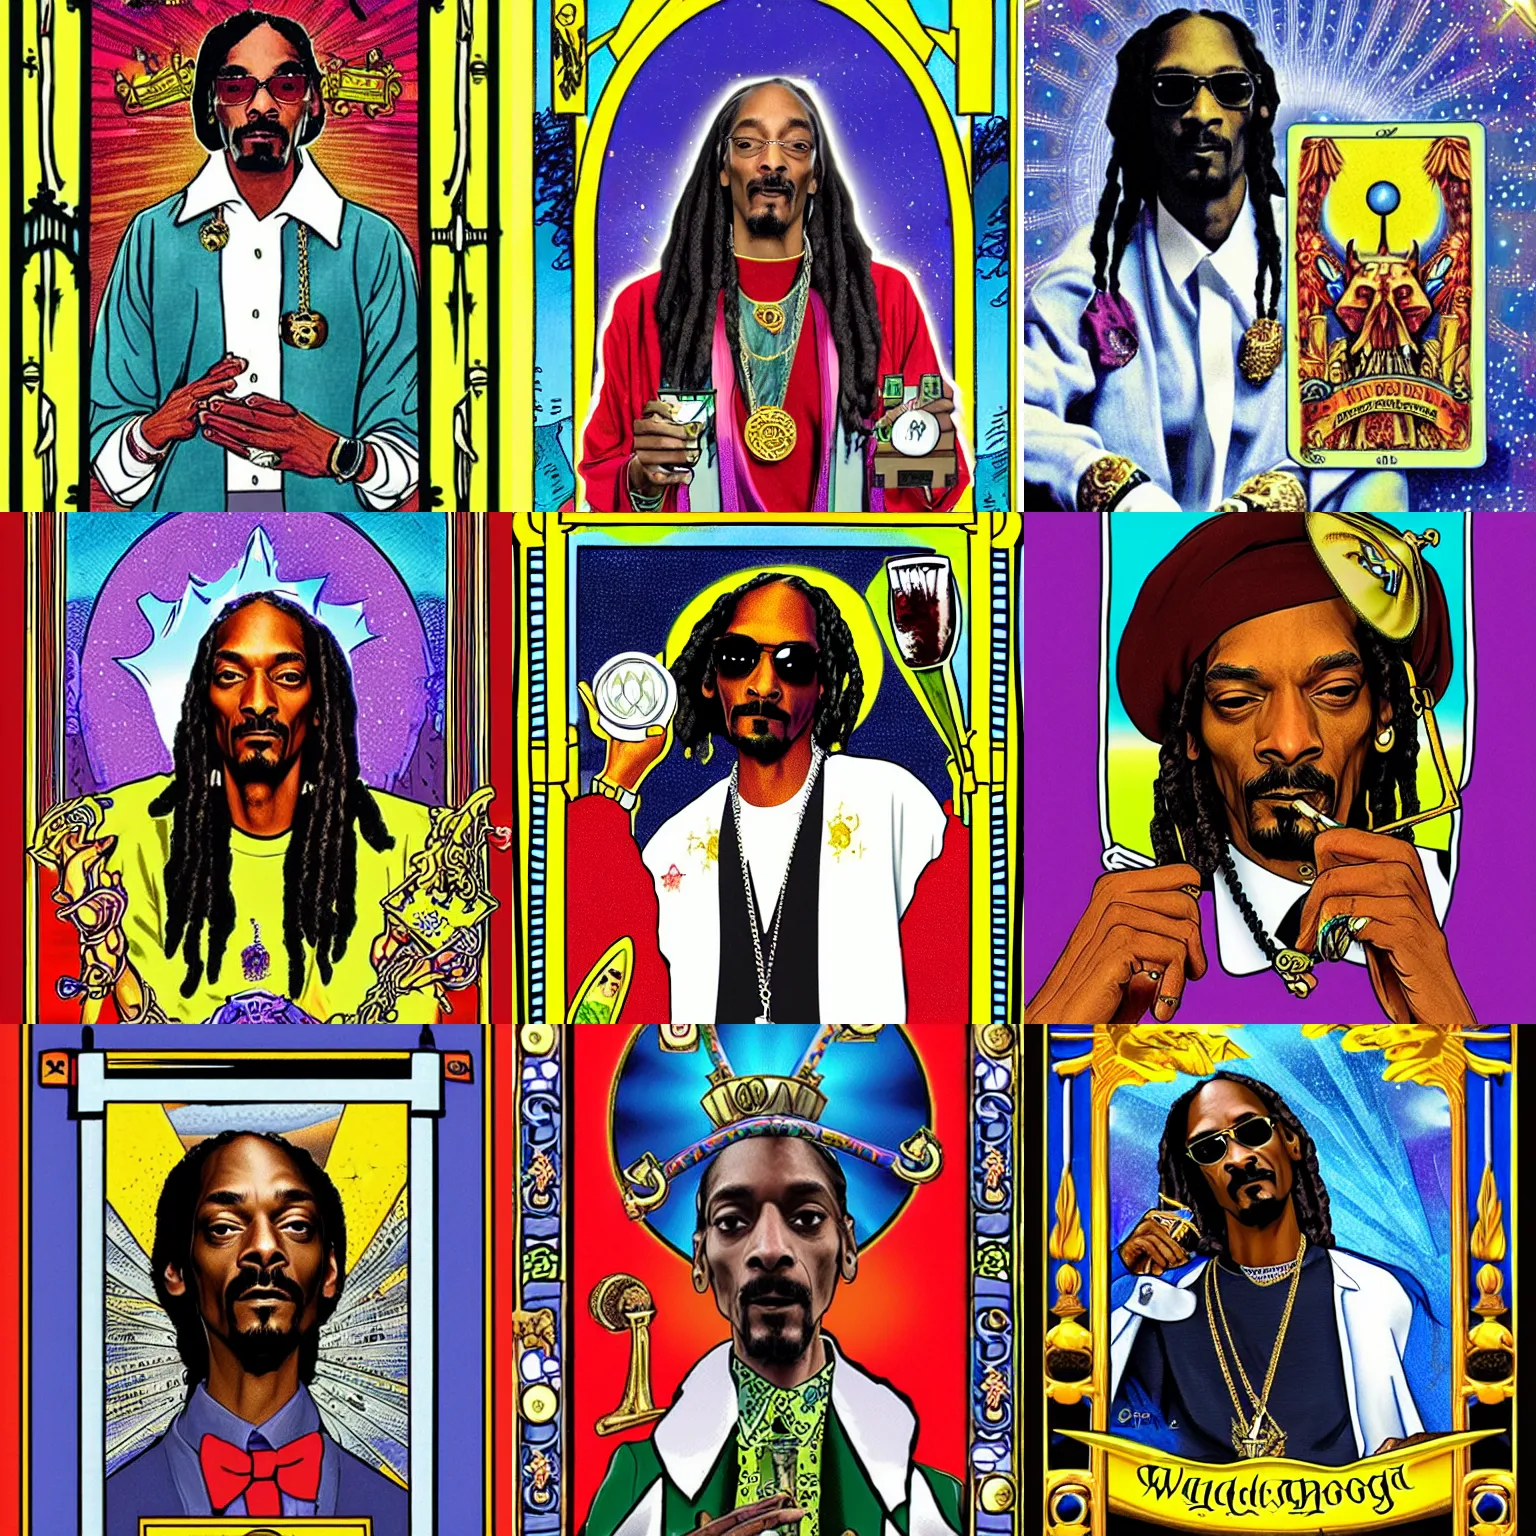 Prompt: Snoop Dogg, Rider-Waite tarot